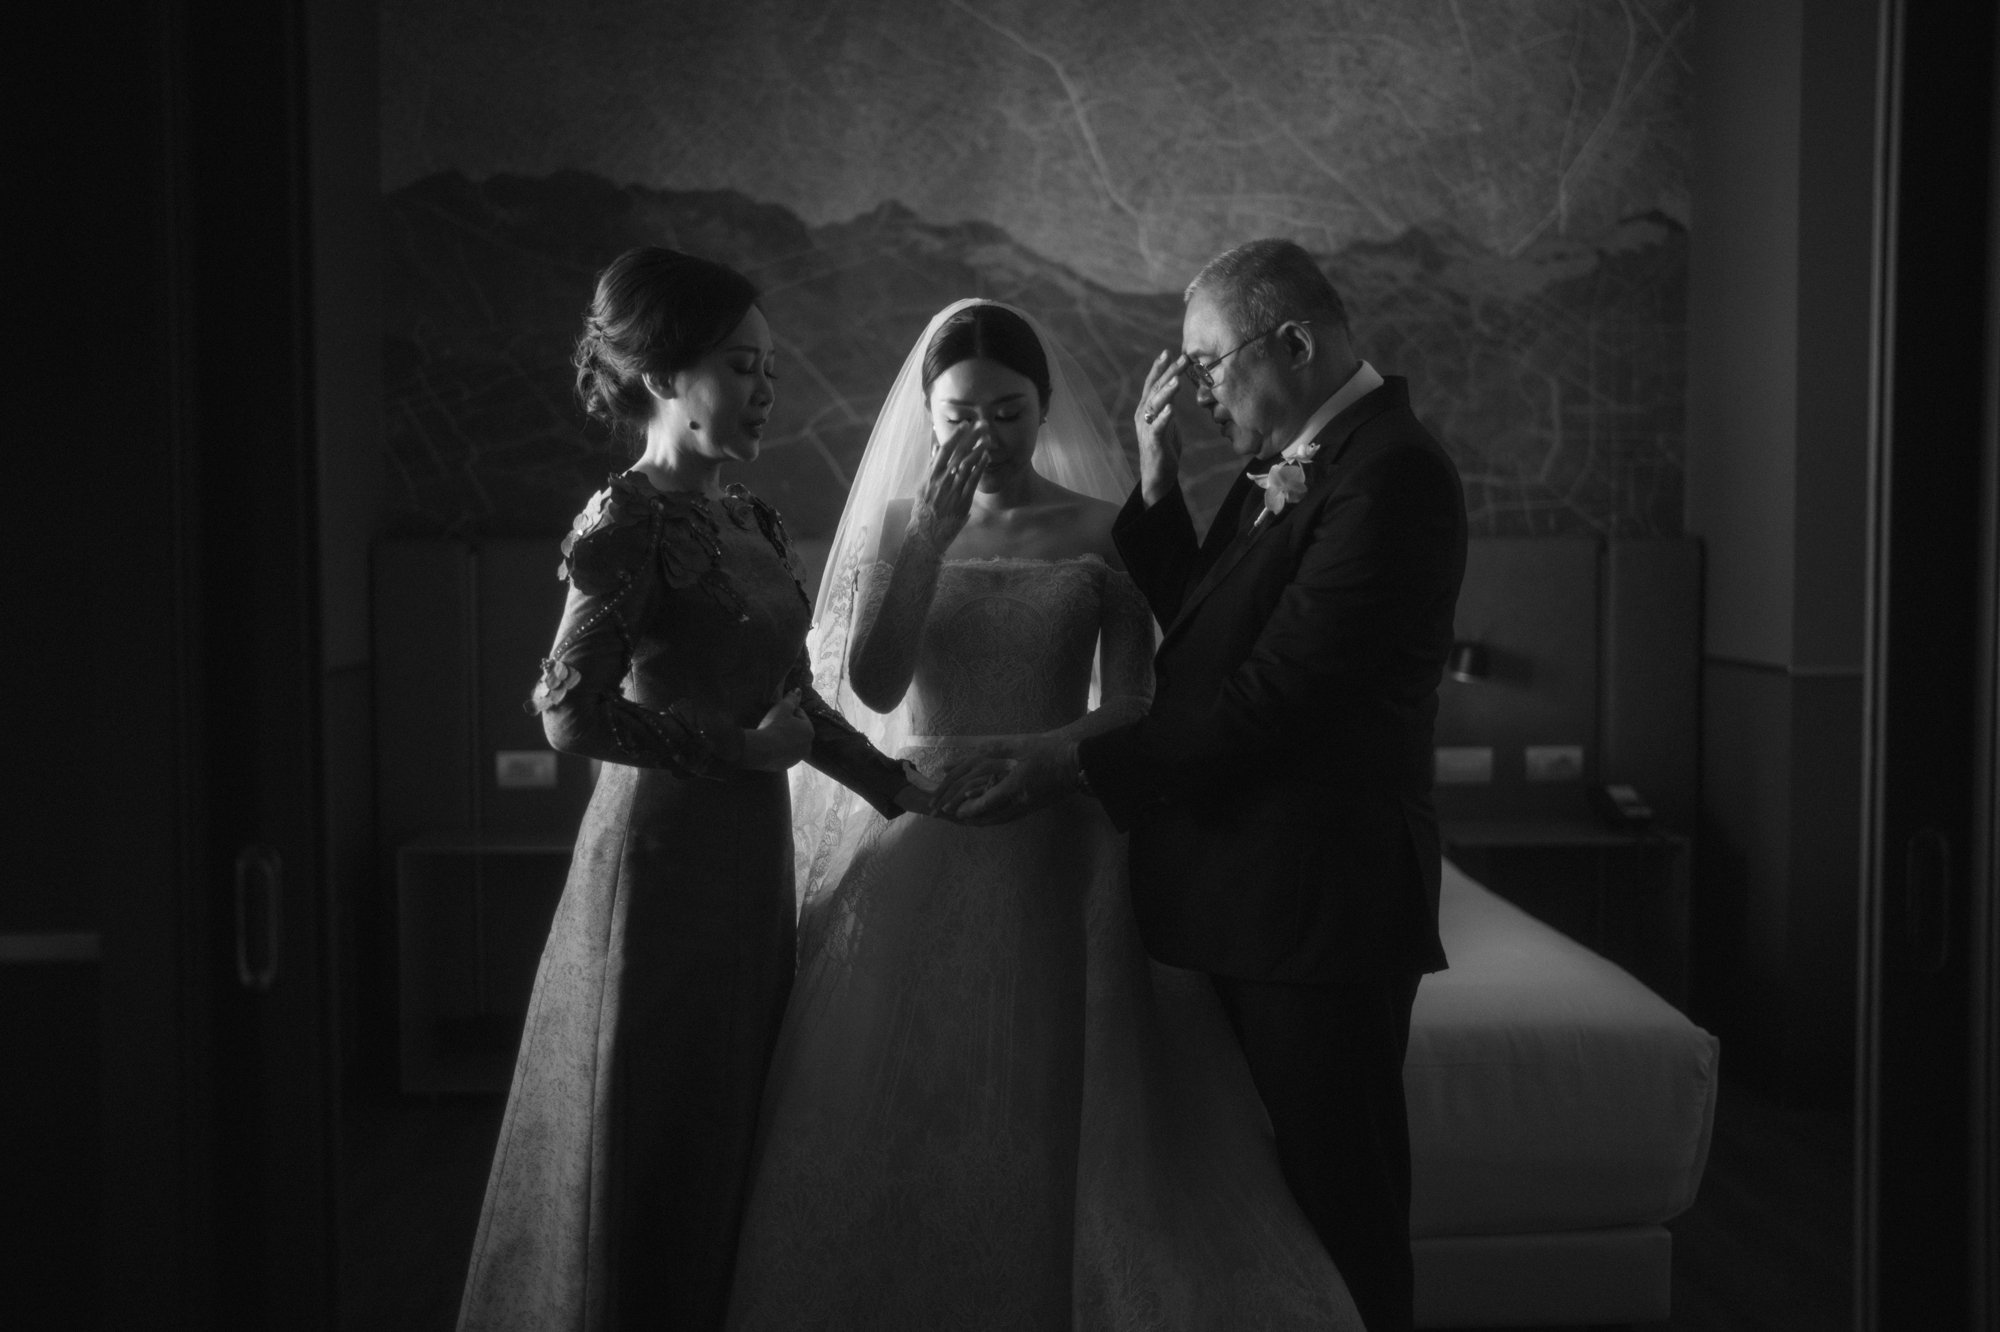 Prawira-Evelyn-Dolomites-Italy-Santre wedding-Yefta Gunawan-Jeriko MUA-Carol Kuntjoro Photography-38.jpg